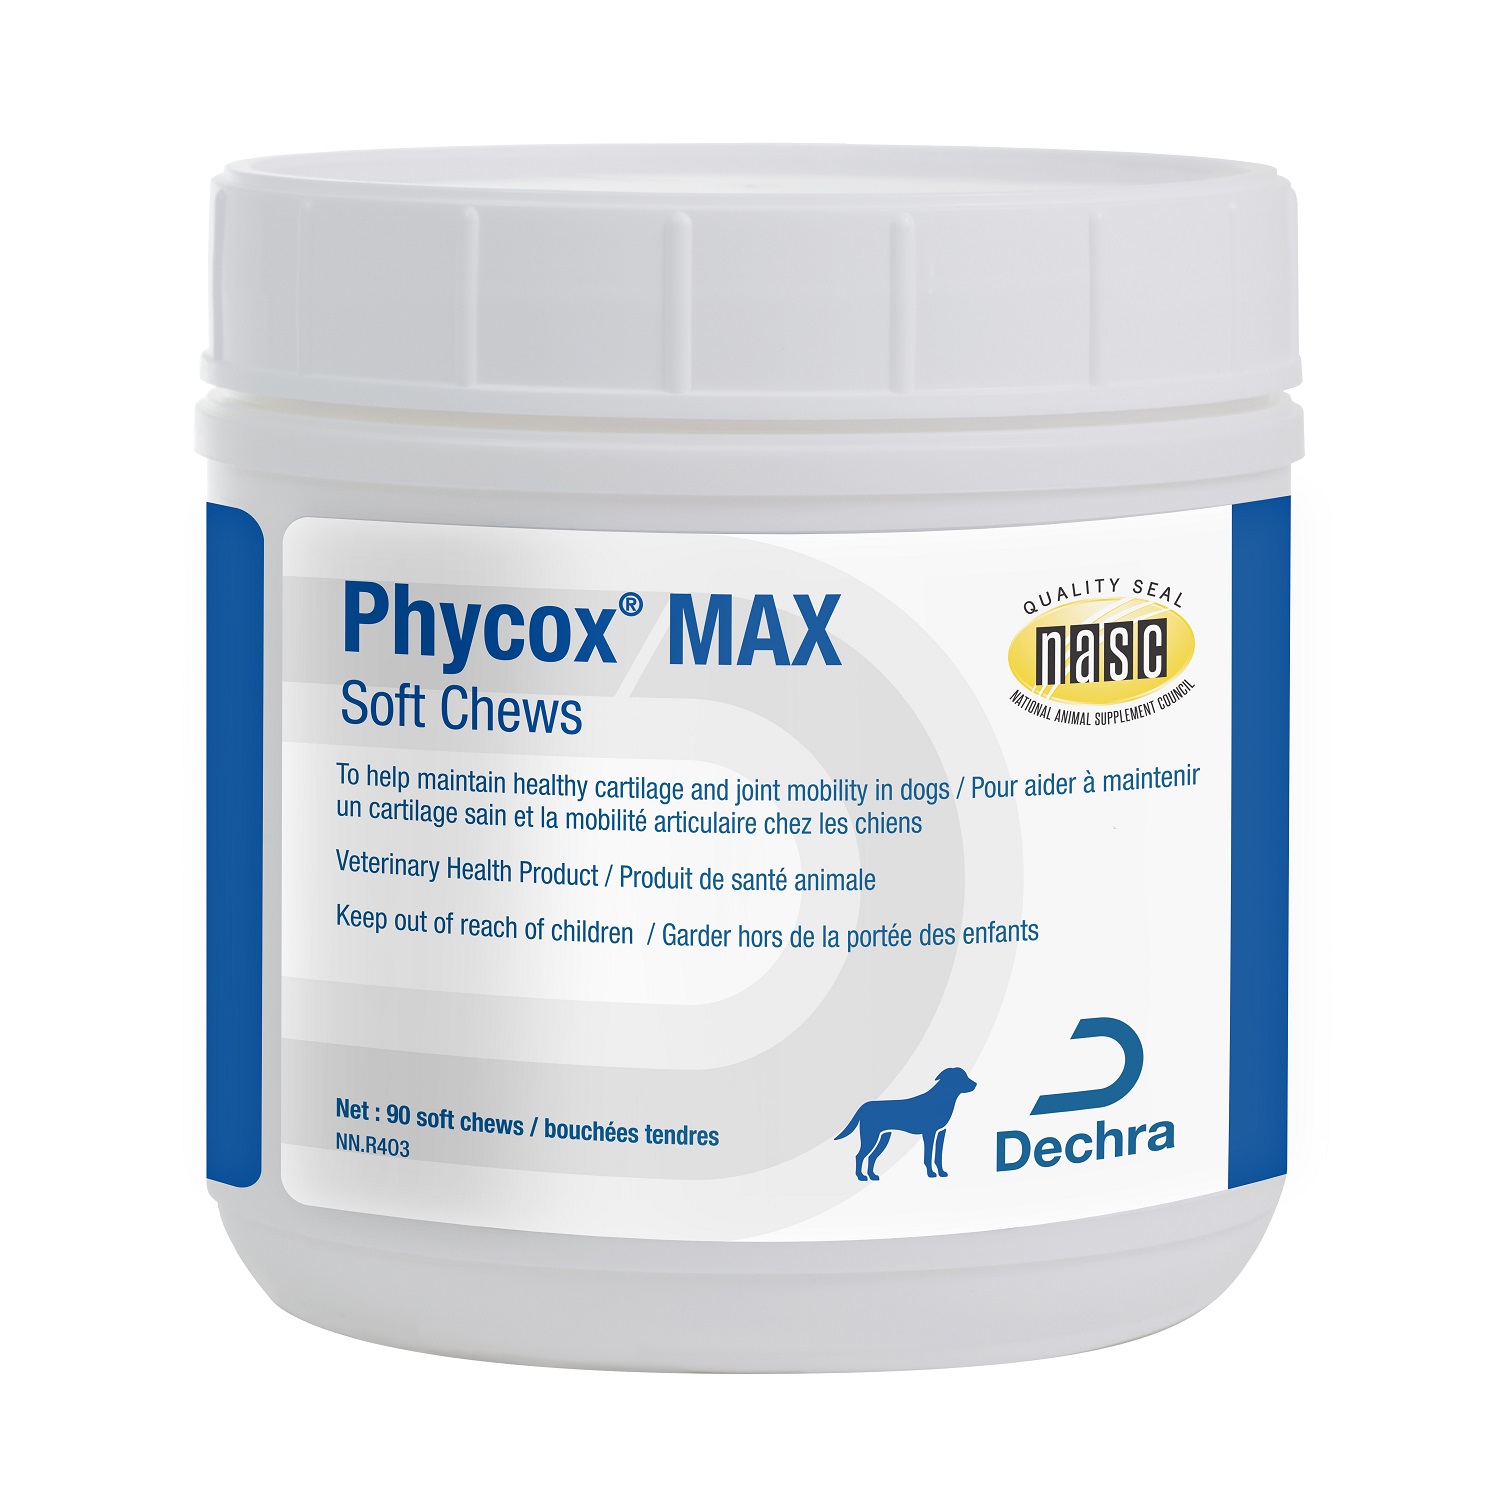 Dechra Phycox MAX Soft Chews